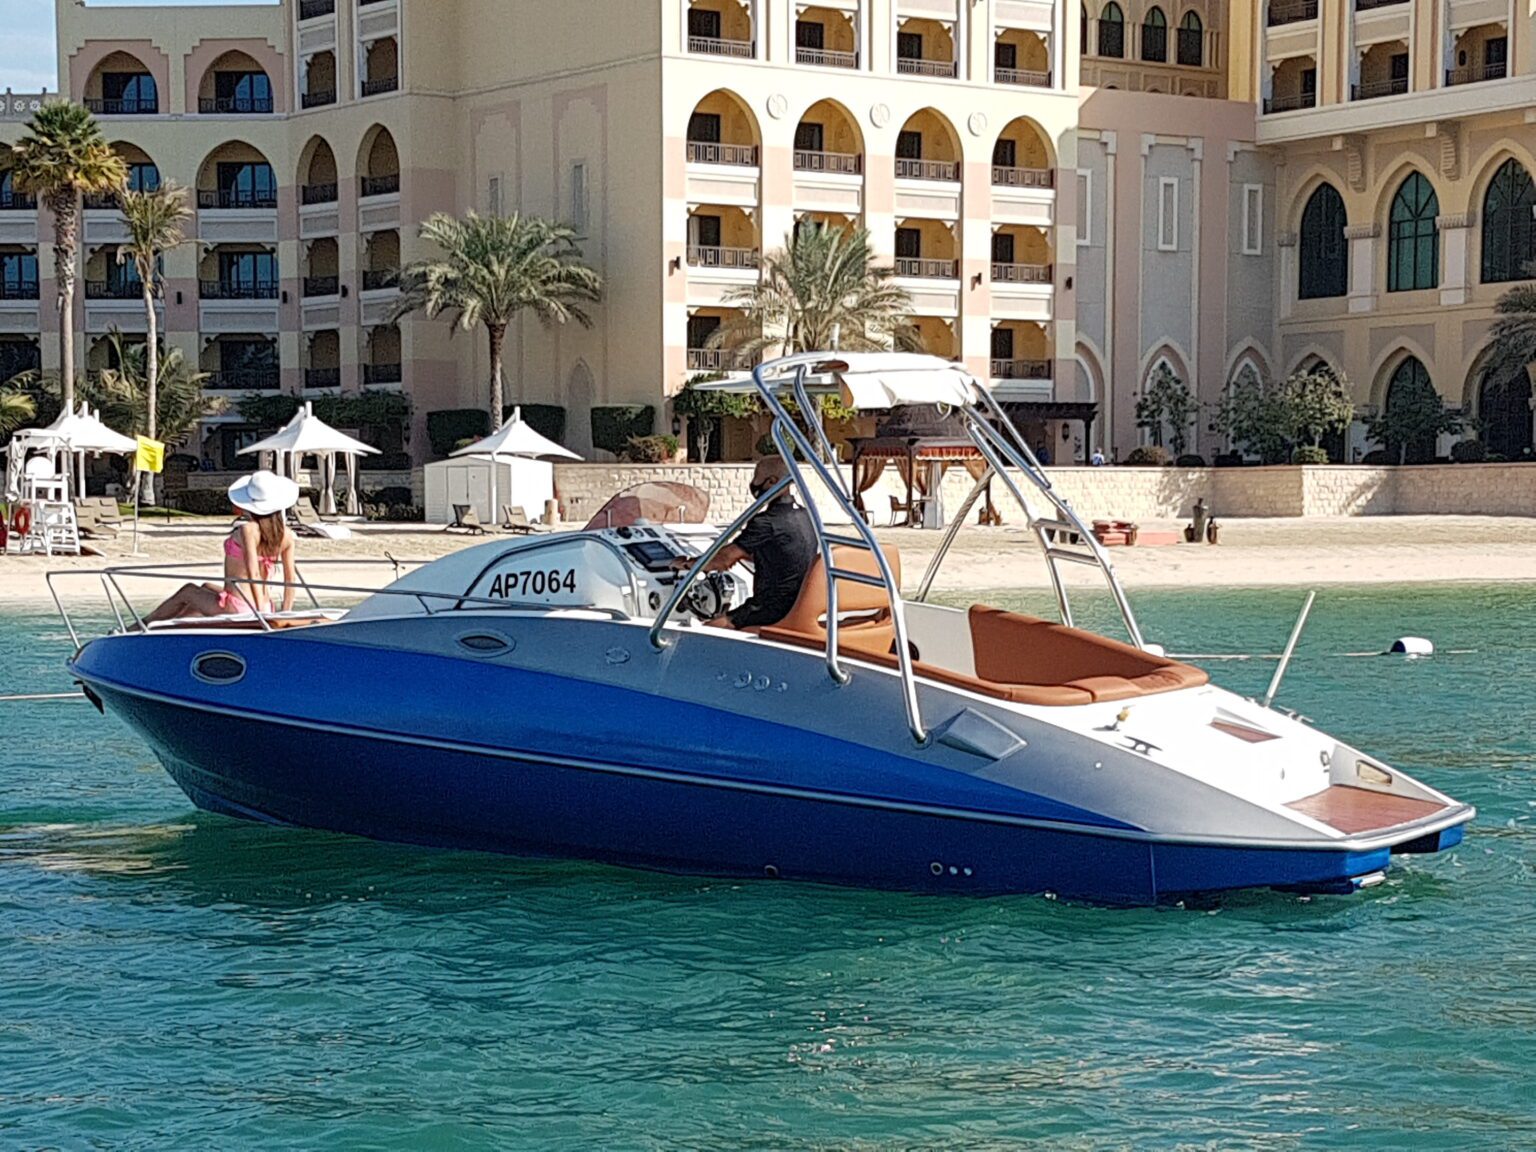 Abu Dhabi Miniyacht Tour